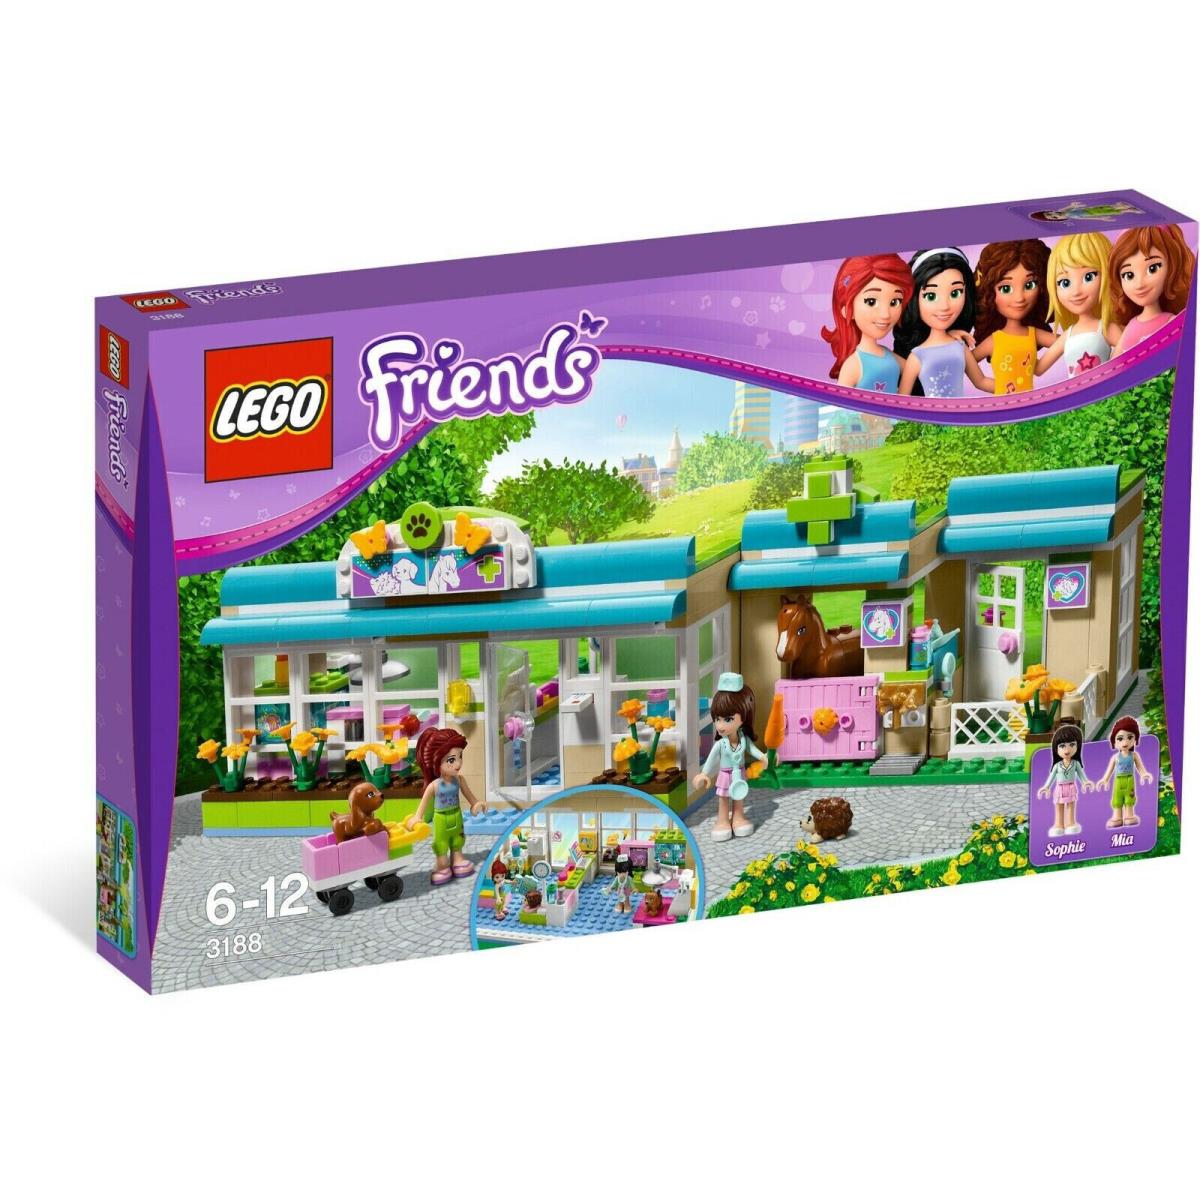 Lego 3188 Friends Heartlake Vet